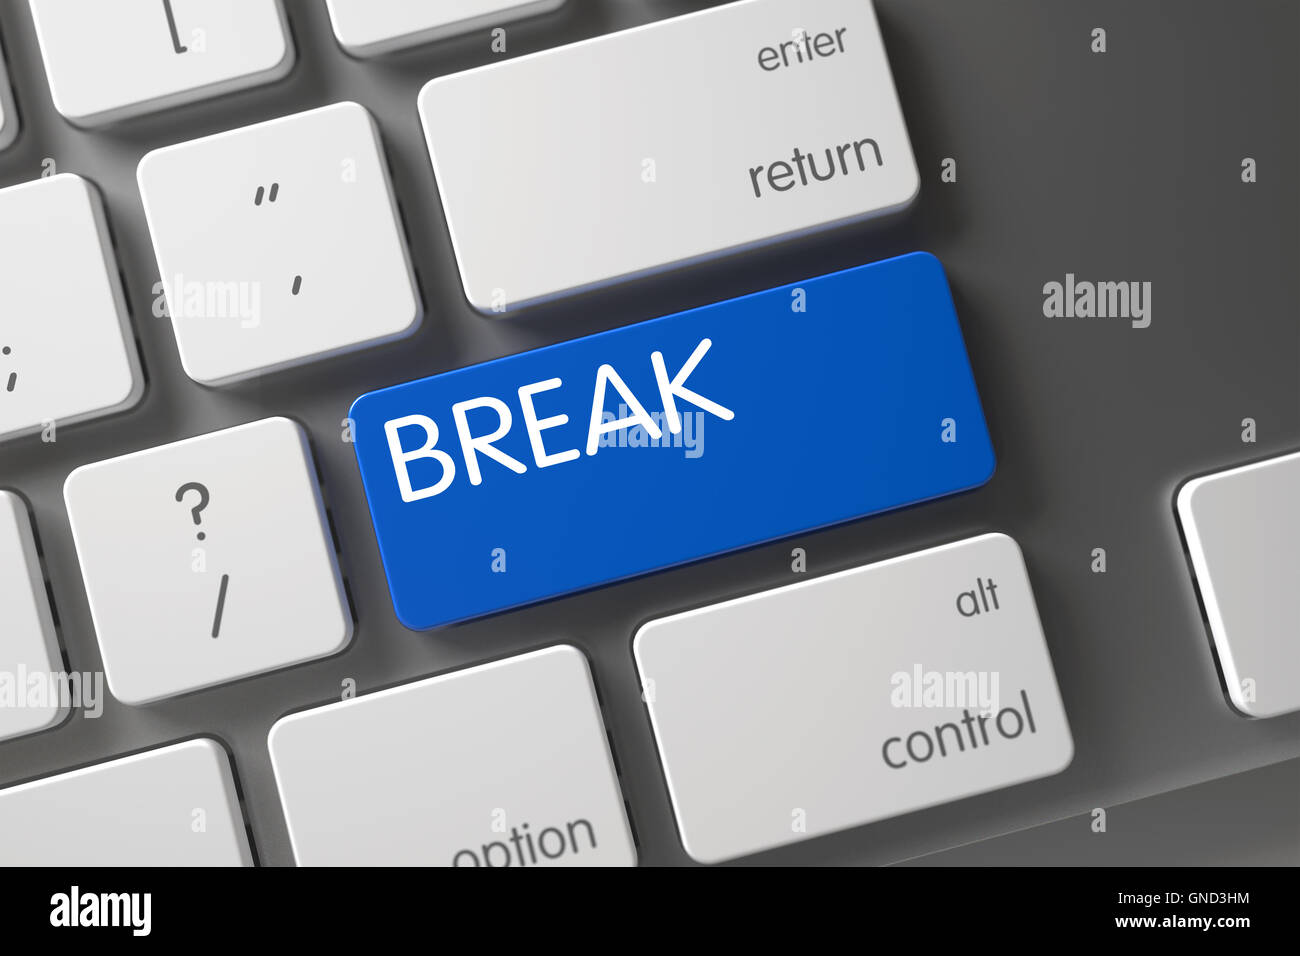 Keyboard with Blue Keypad - Break. 3D Illustration. Stock Photo